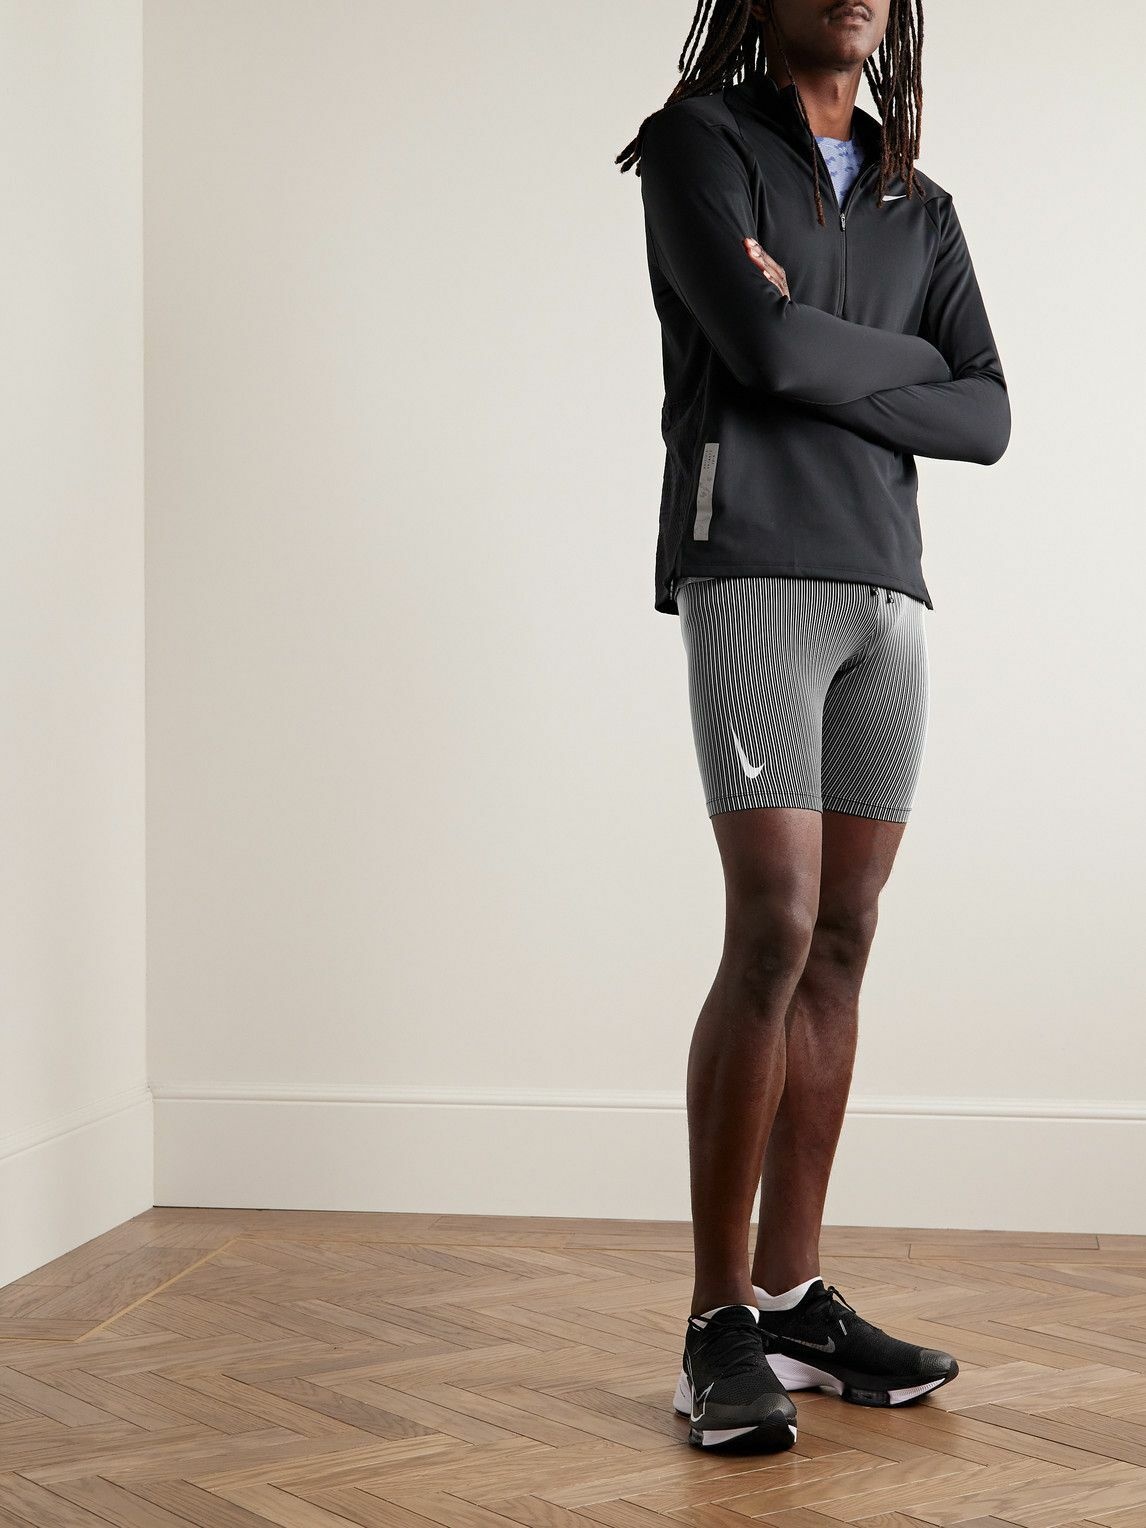 Nike Aeroswift half tights  Clothes design, Tights, Fashion tips